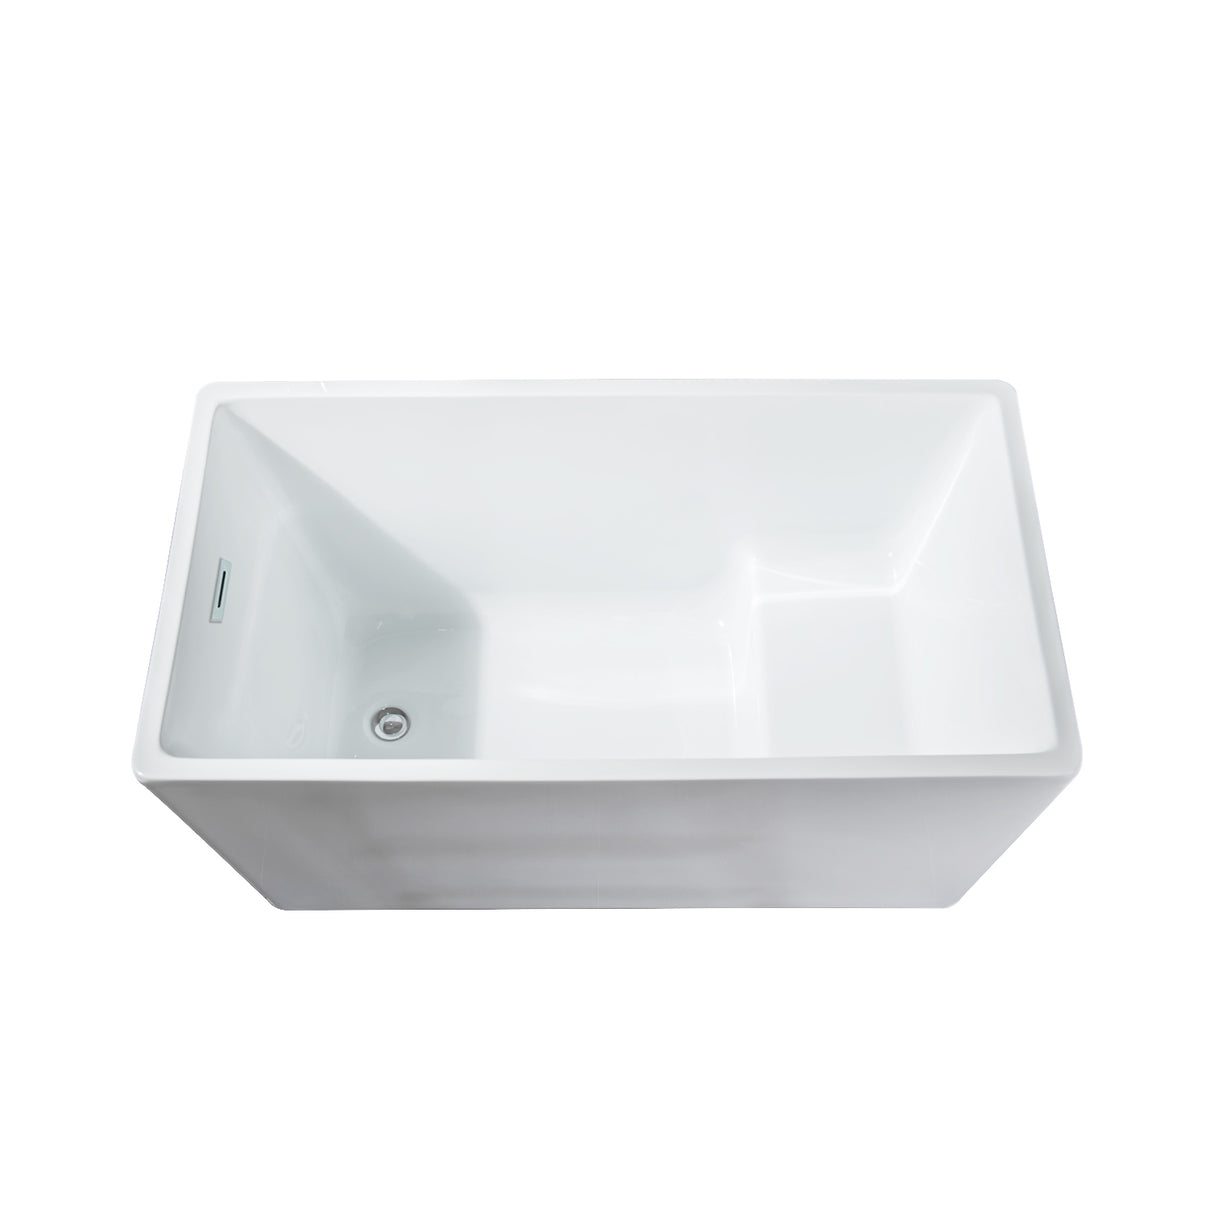 Freestanding Acrylic Flatbottom  Soaking Tub  Bathtub in White